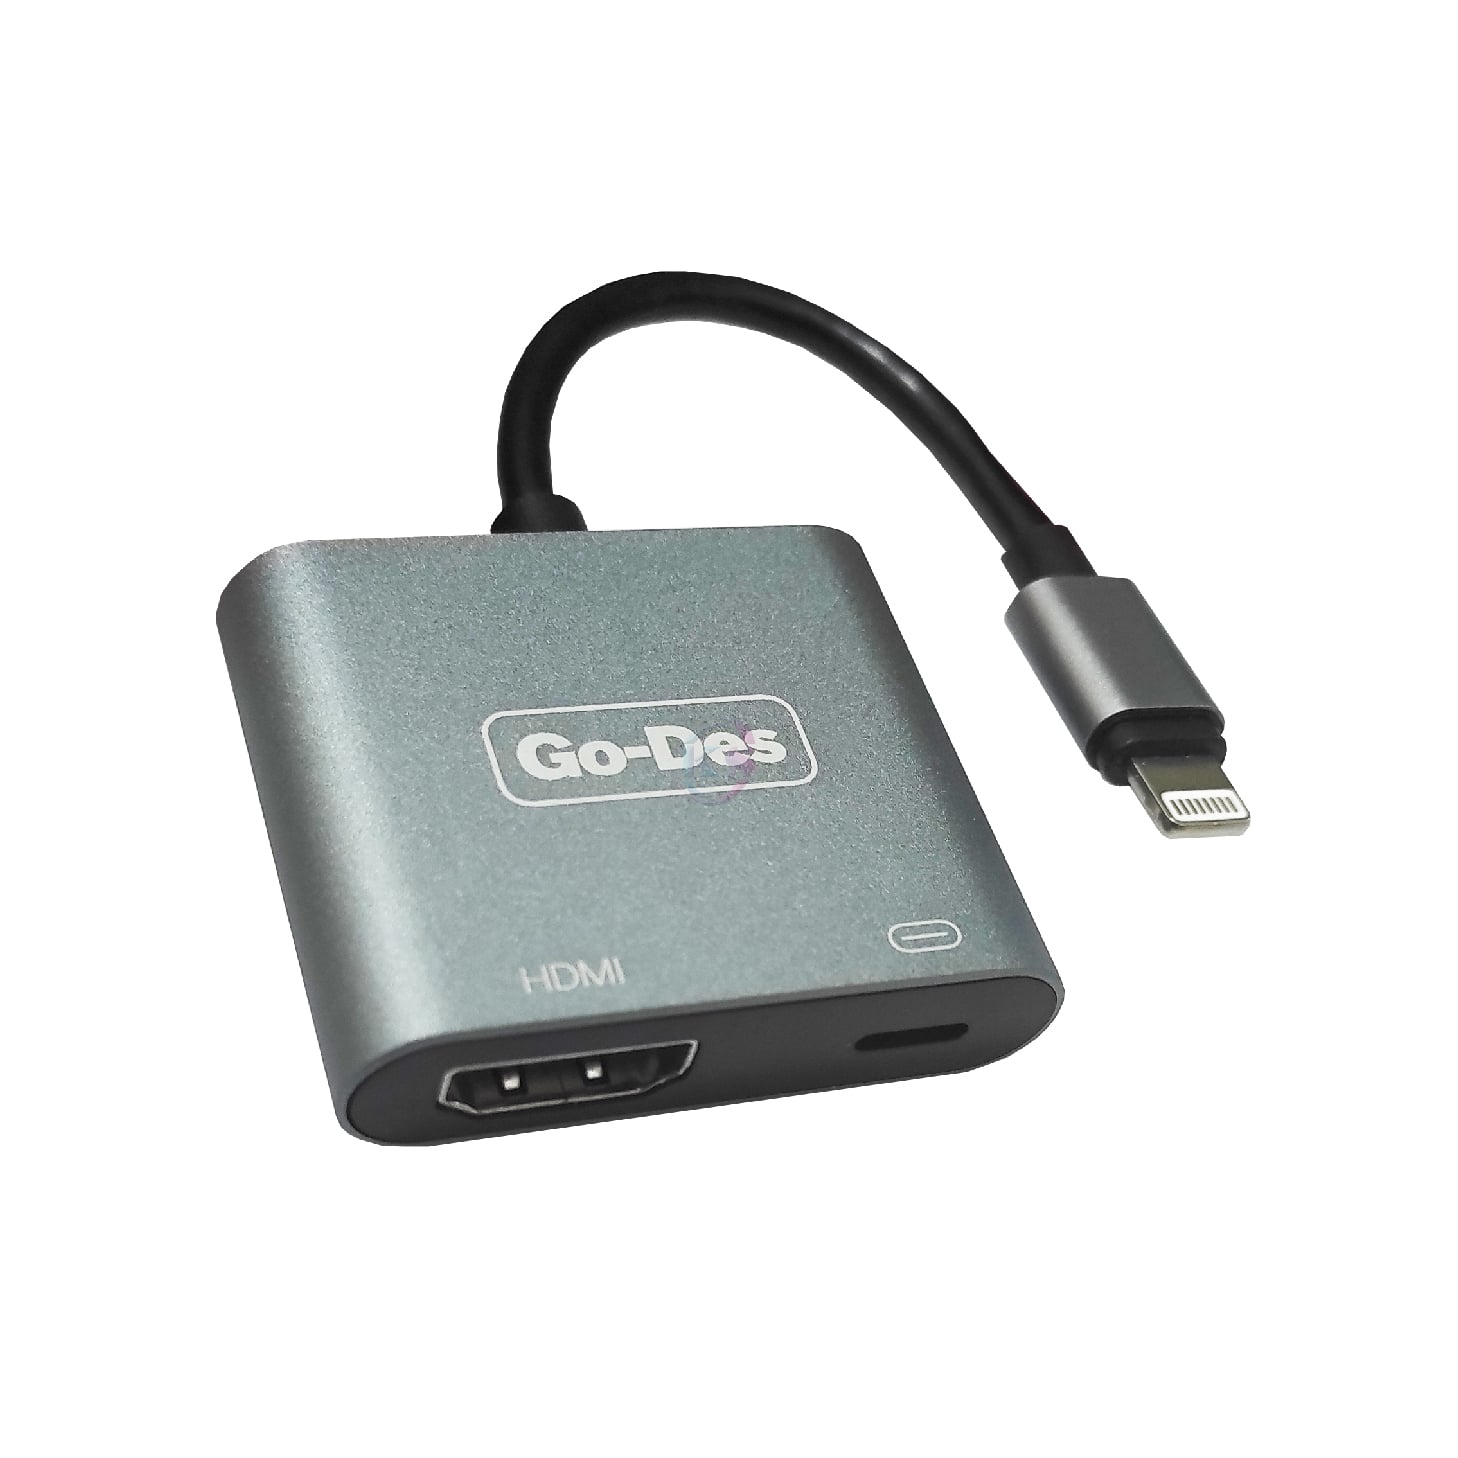 مبدل لايتنينگ به HDMI گودس مدل GD-8285